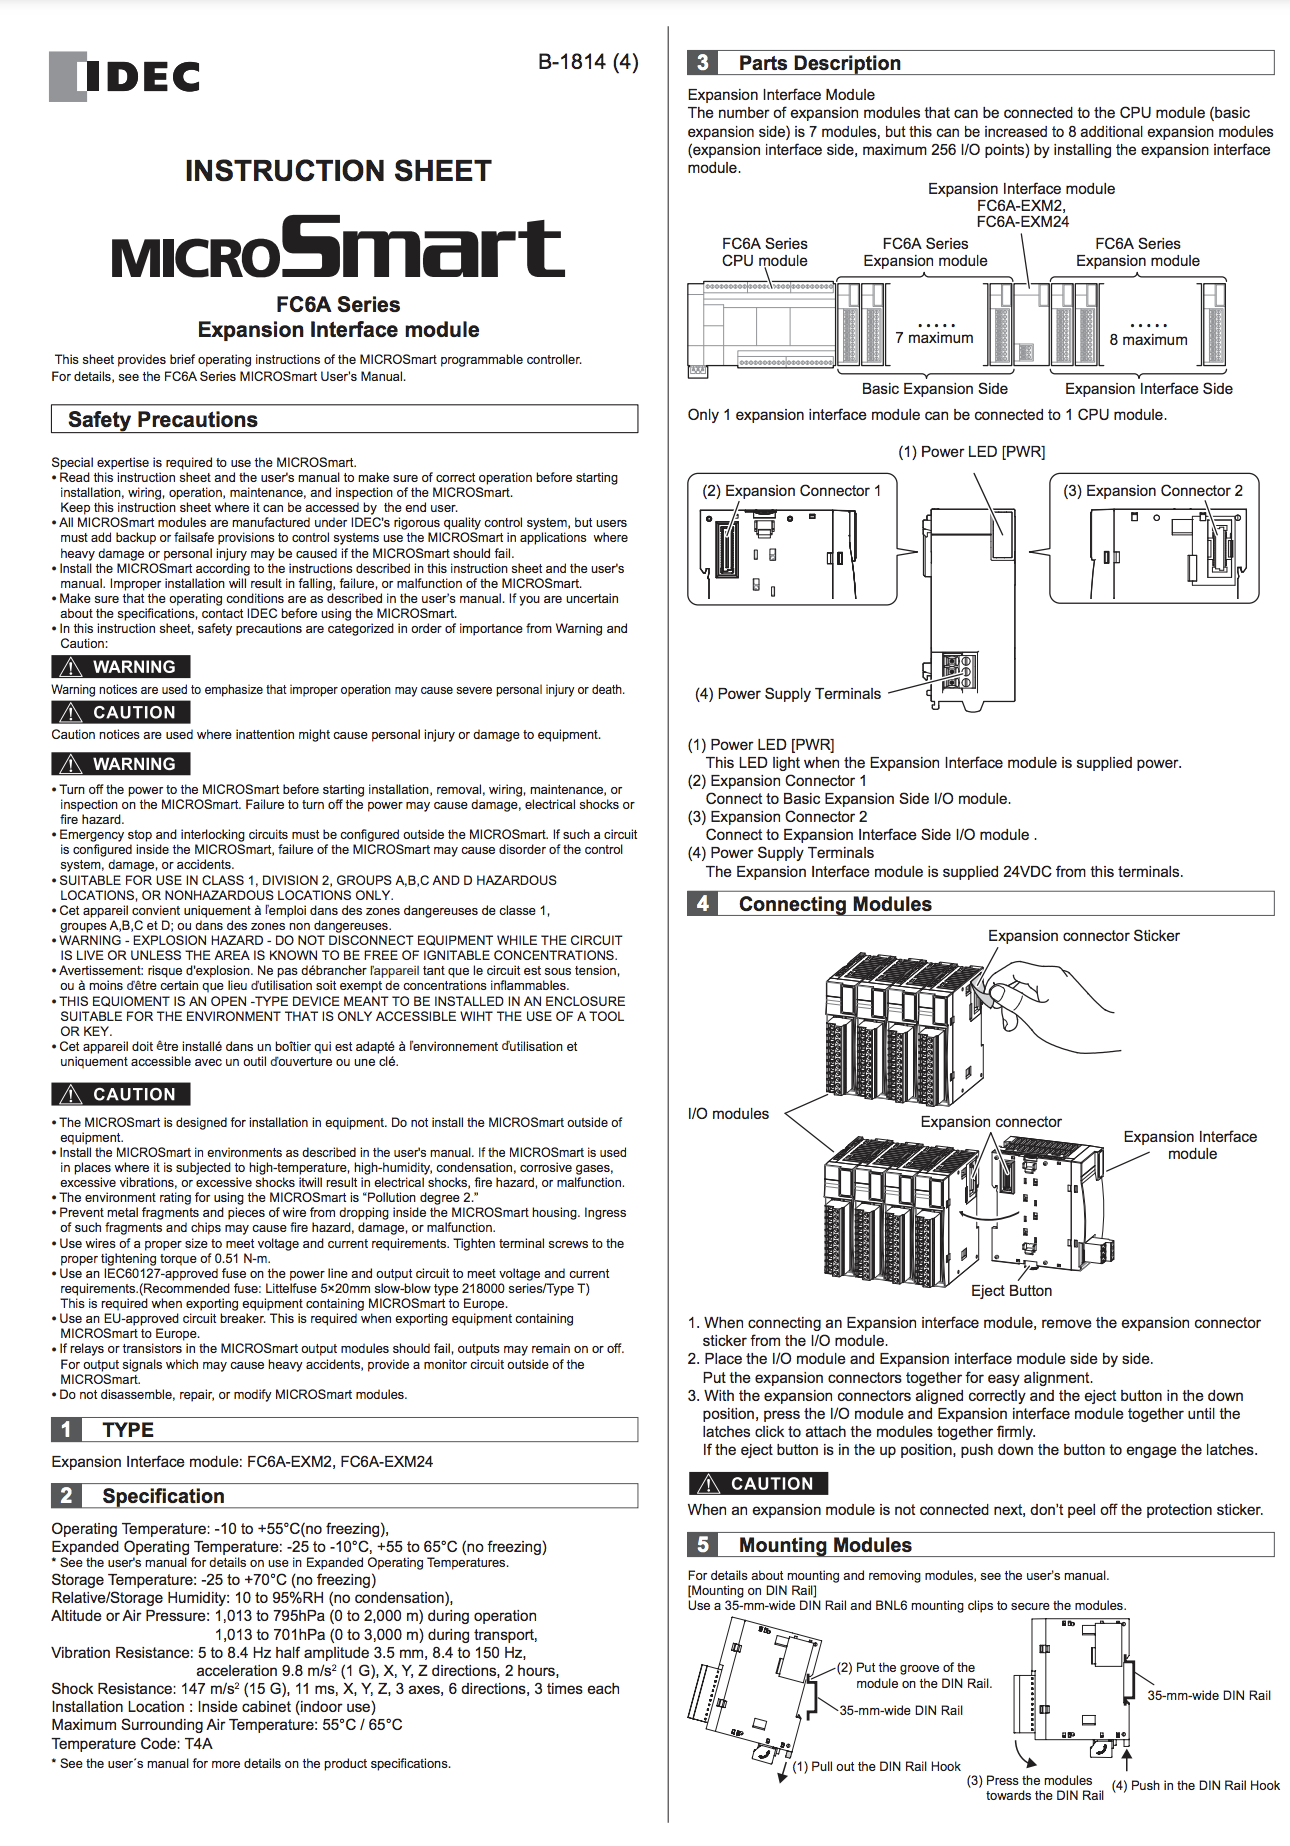 IDEC FC6A MICROSmart Expansion Interface Module Instruction Sheet